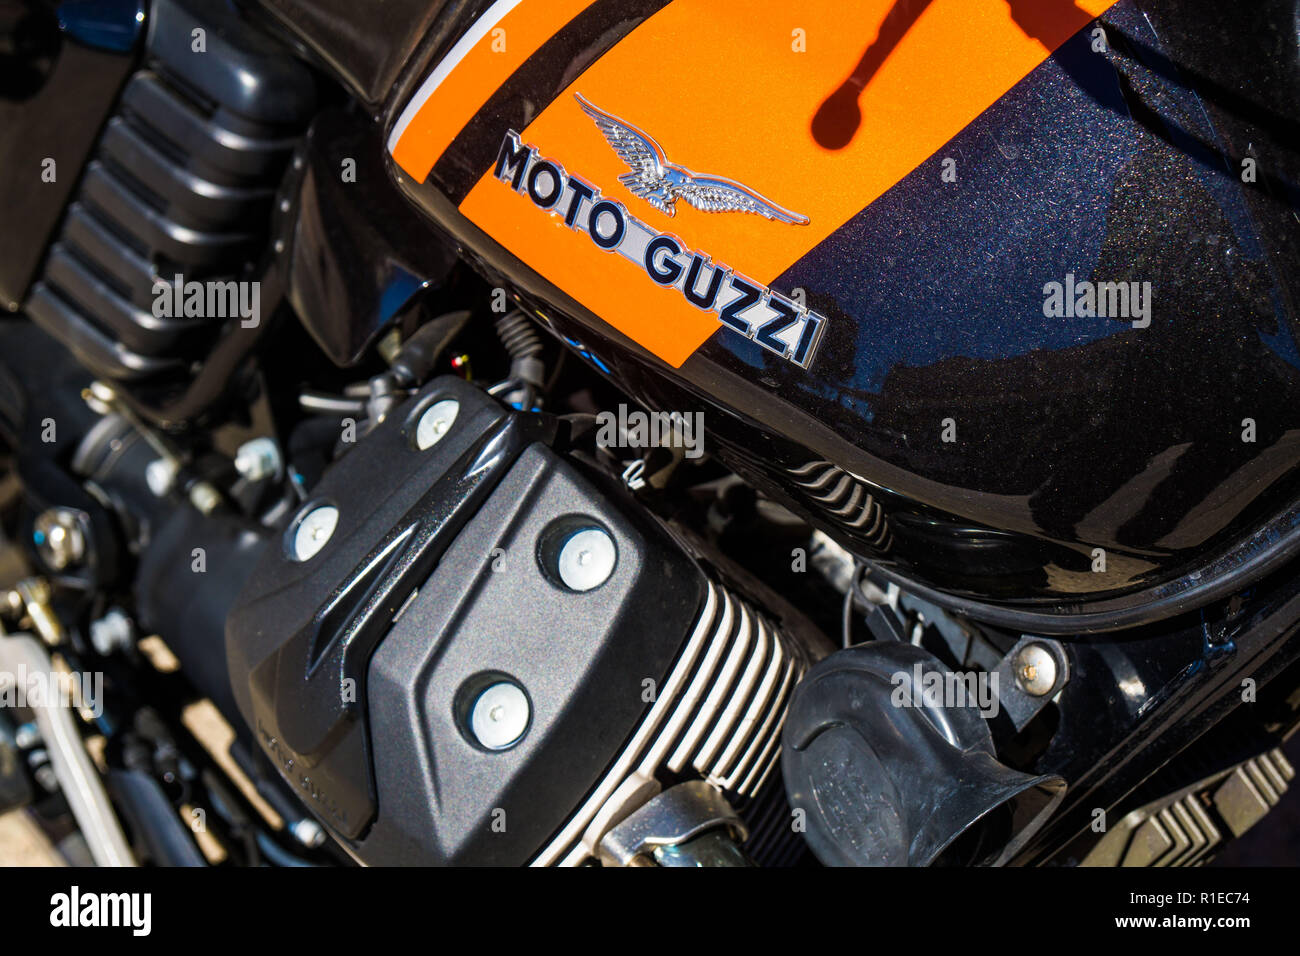 Una Moto Guzzi V7 motociclo close up Foto Stock